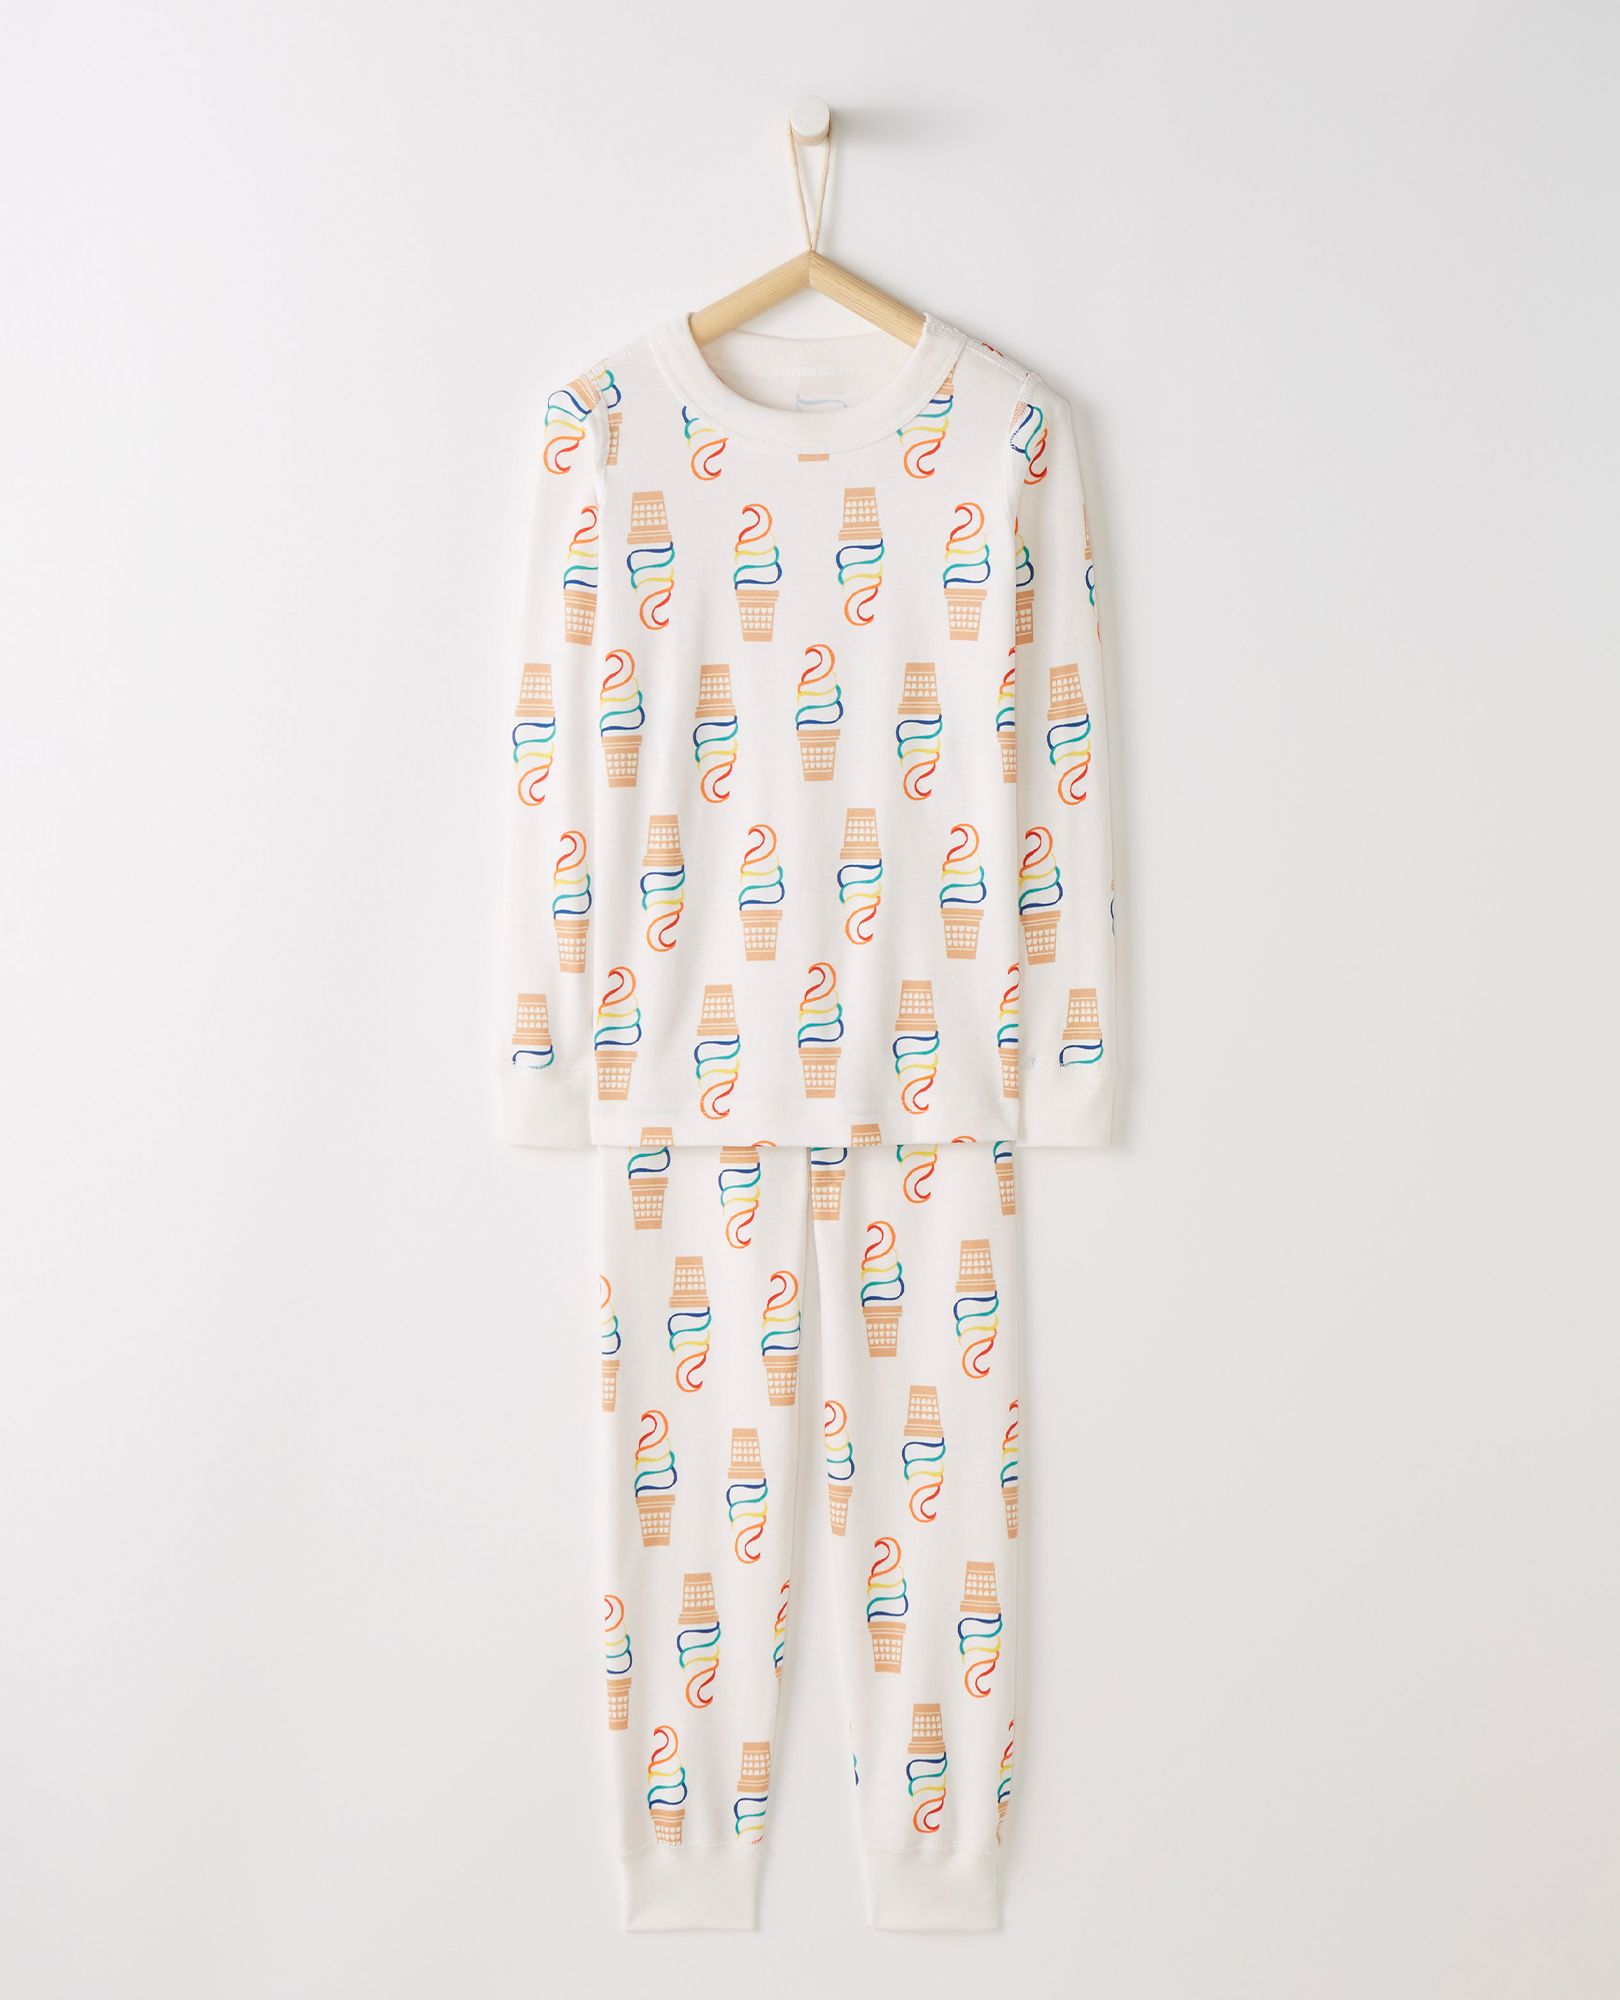 Long John Pajamas In Organic Cotton | Hanna Andersson